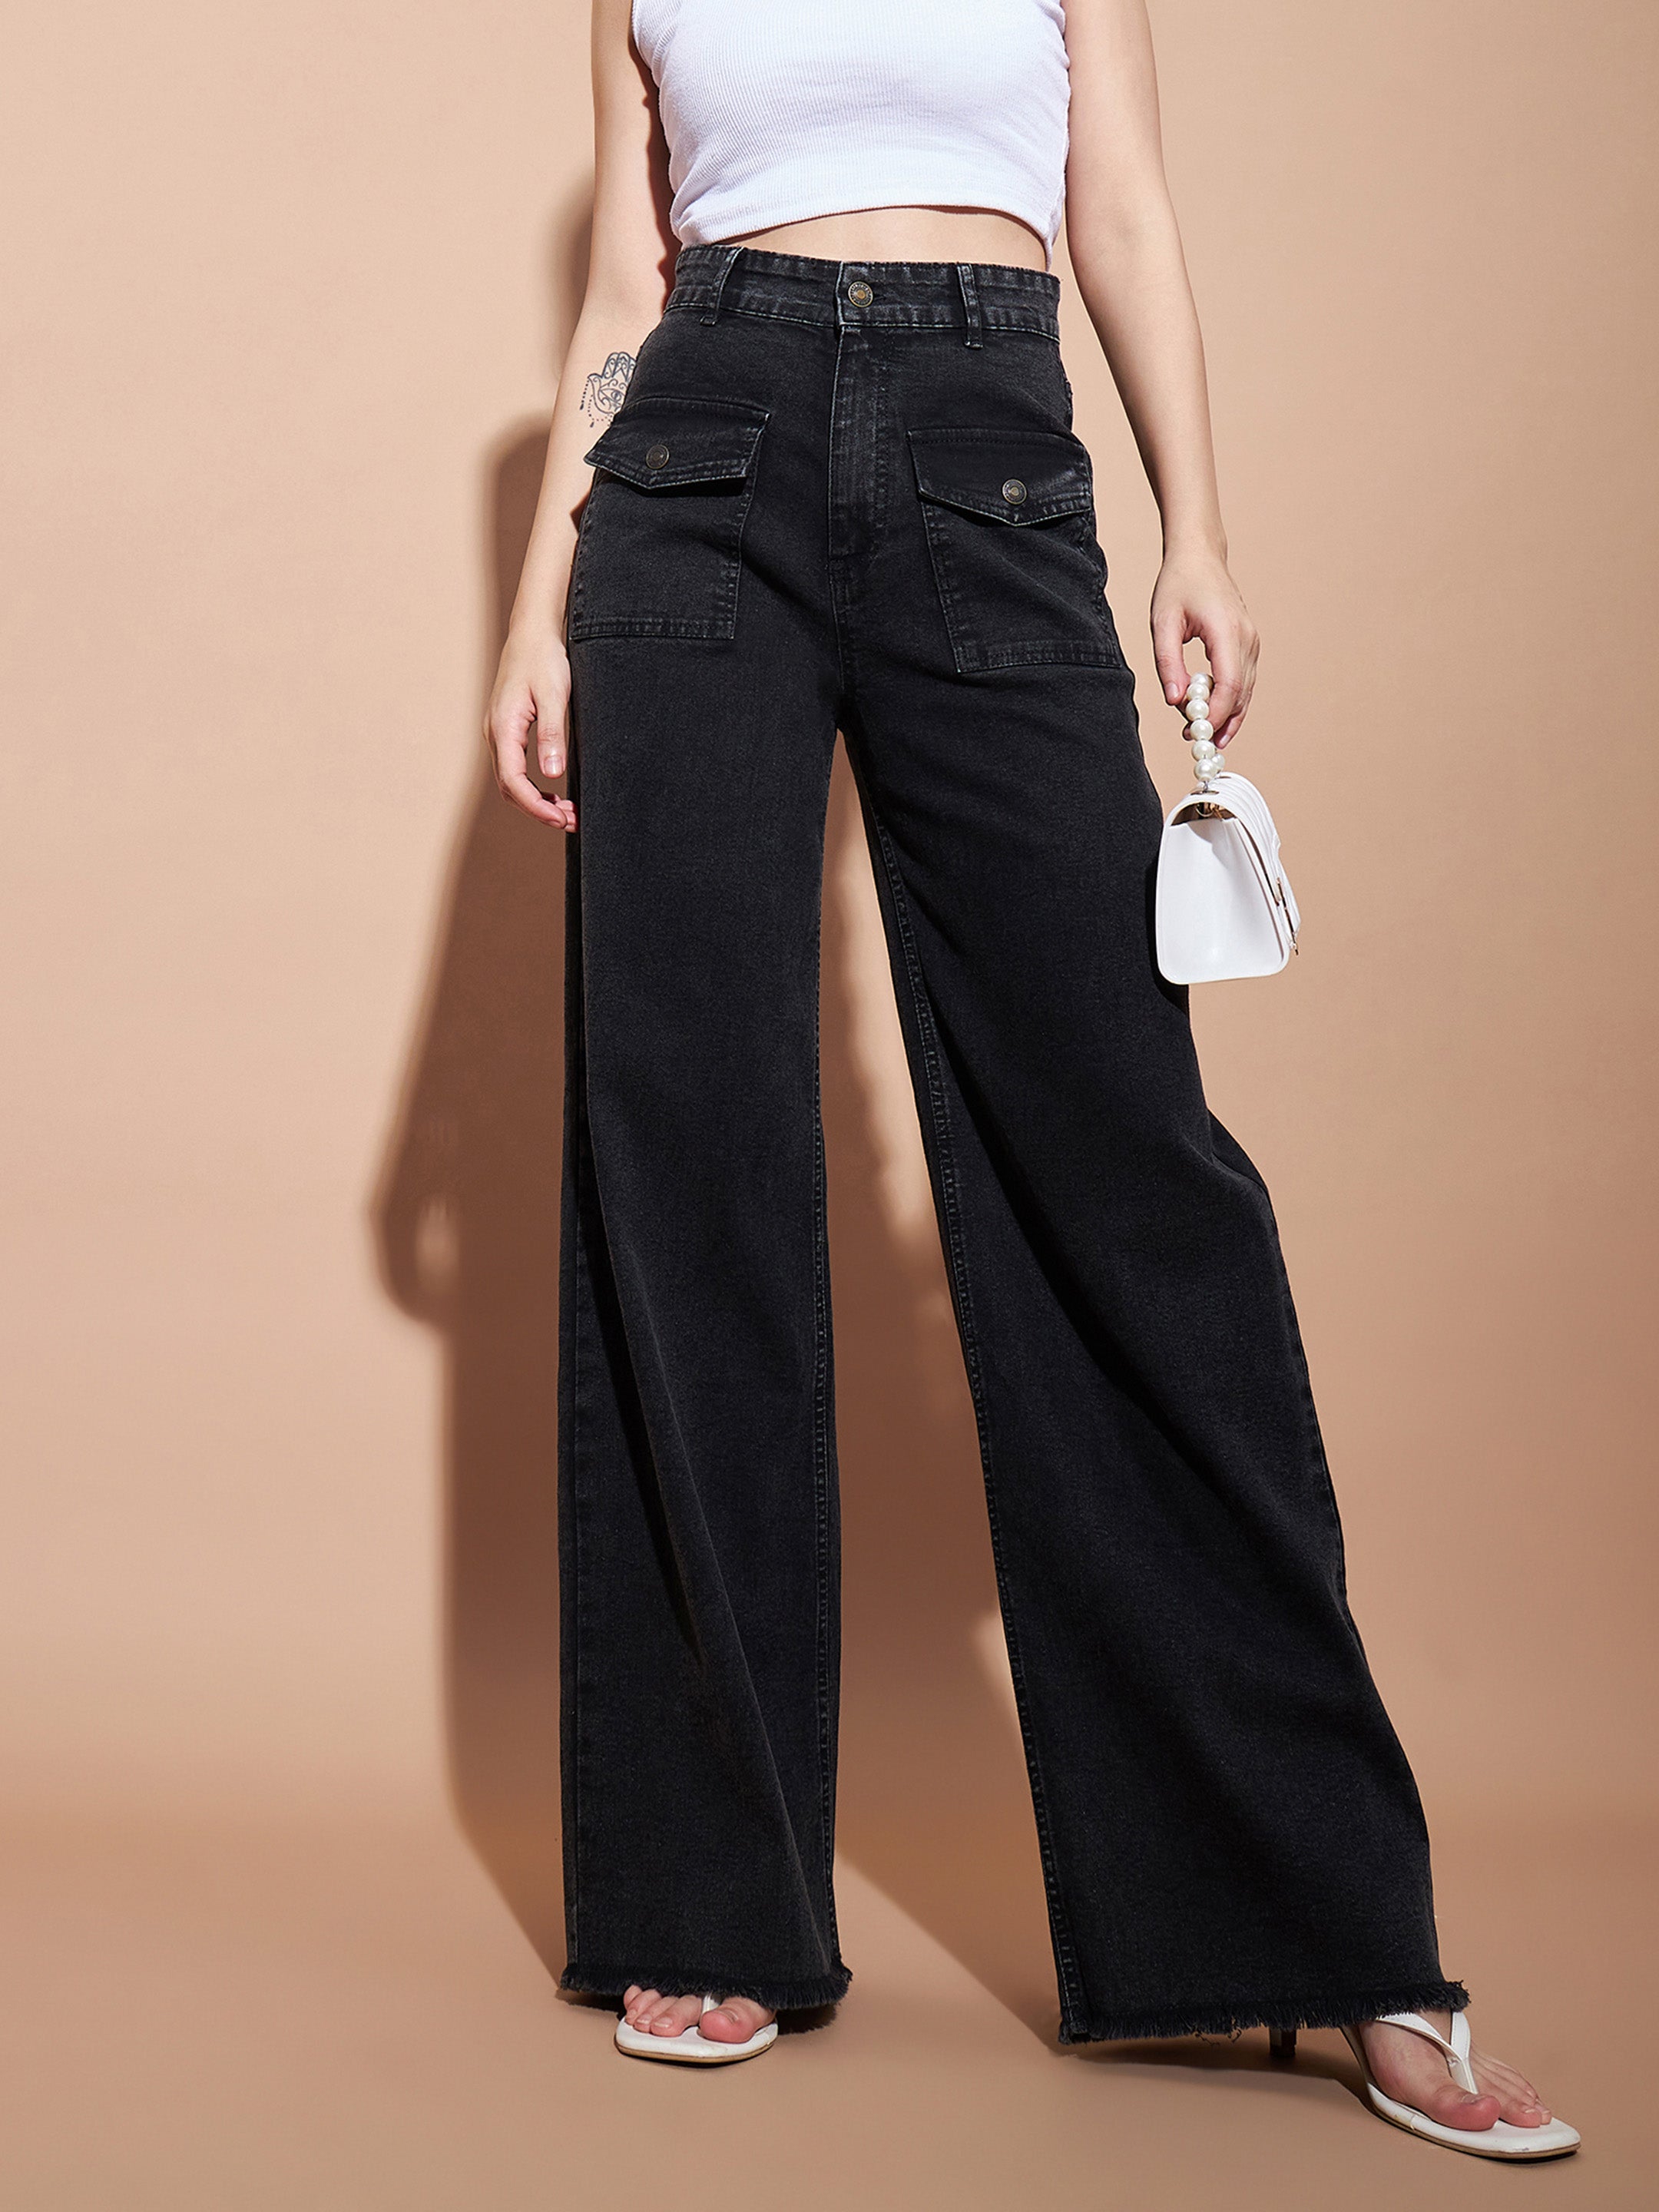 Women's Black High Waist Flap Pocket Straight Jeans - Lyush